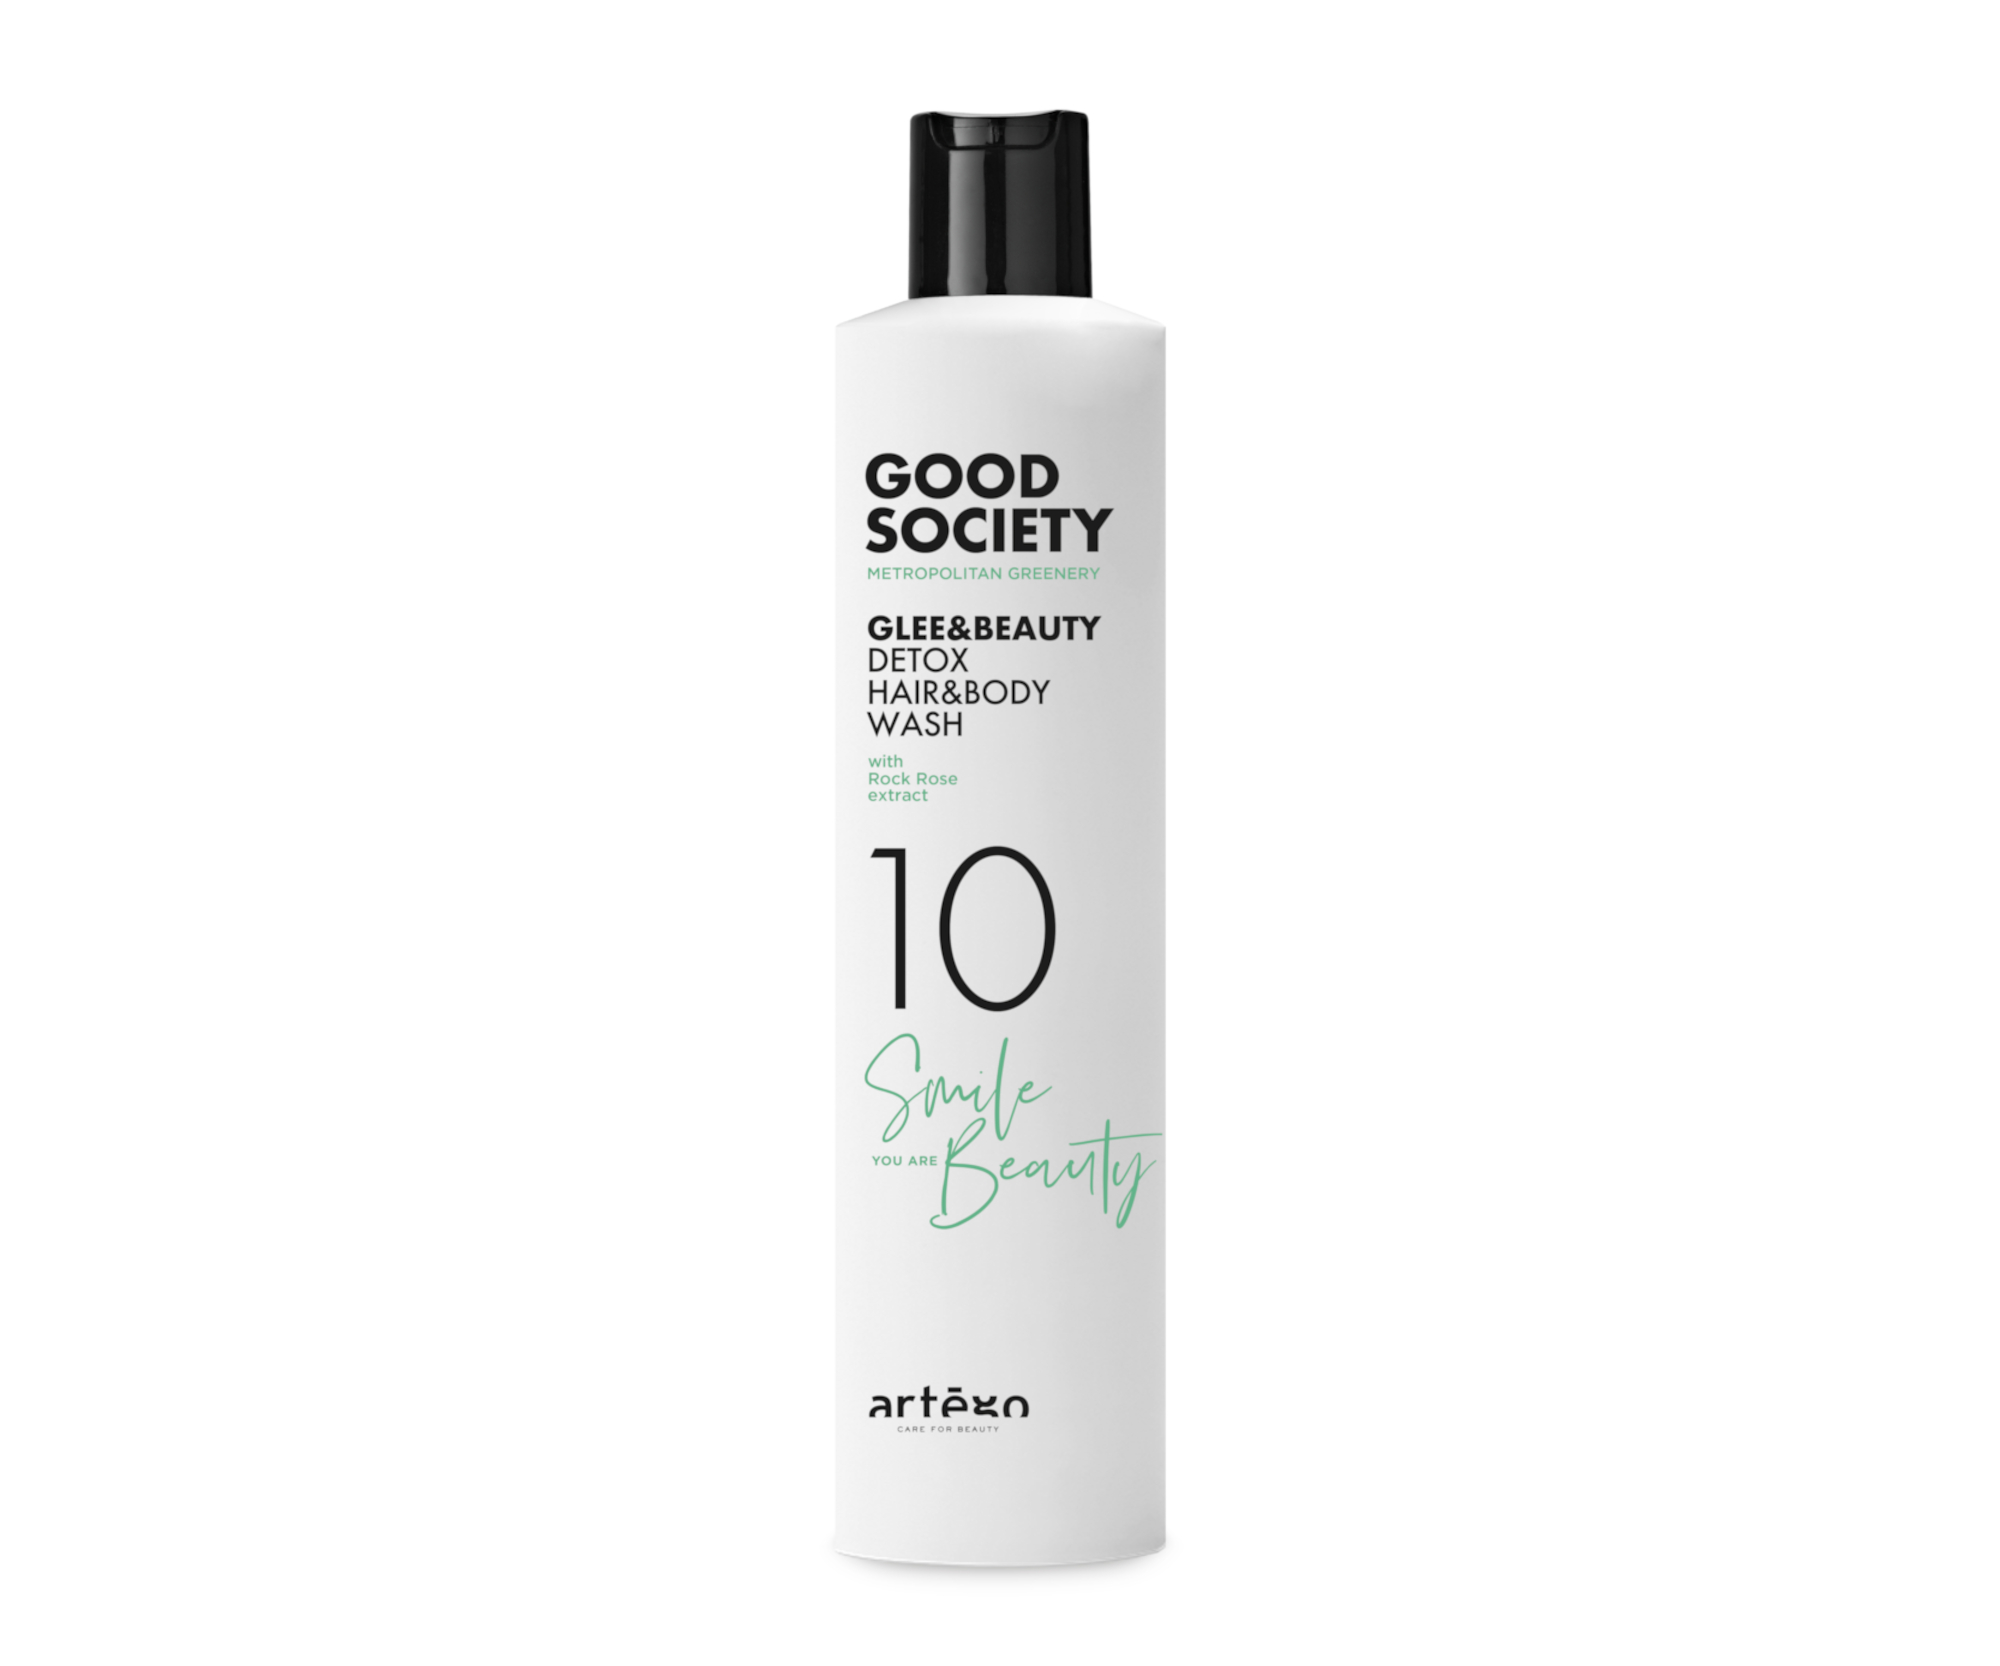 Revitalizační a čistící šampon na vlasy a tělo Good Society 10 Glee a Beauty - 250 ml (0165916) - Artégo + dárek zdarma